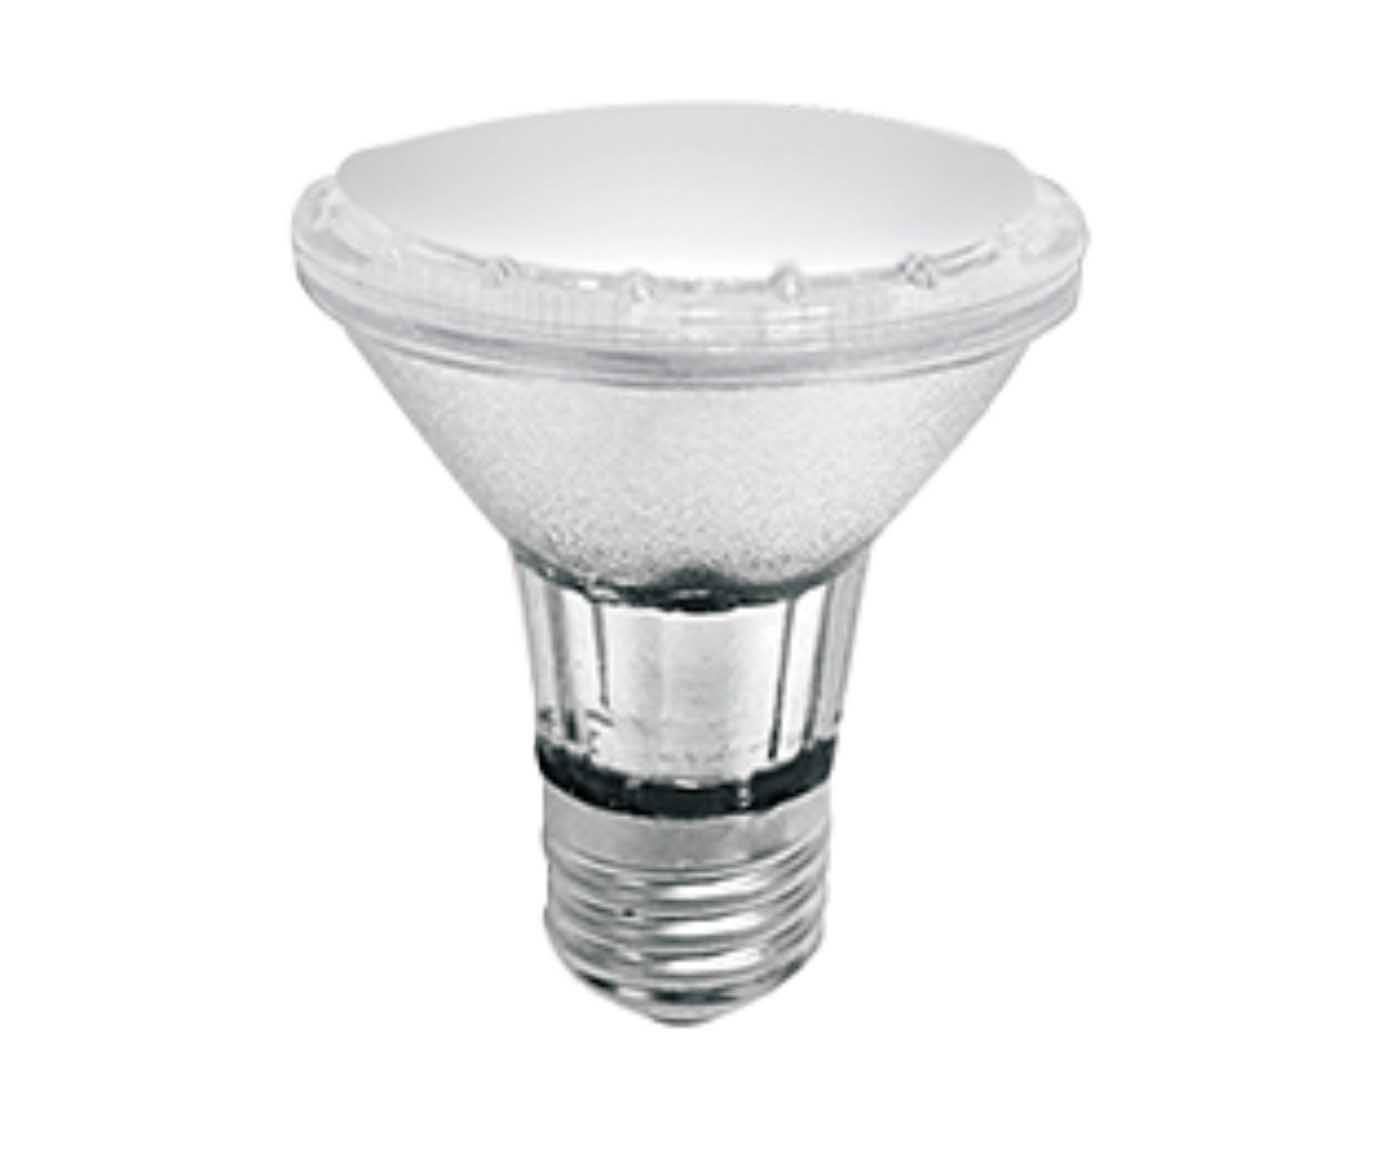 Lâmpada de led parsi union (luz branca) - 127 v | Westwing.com.br